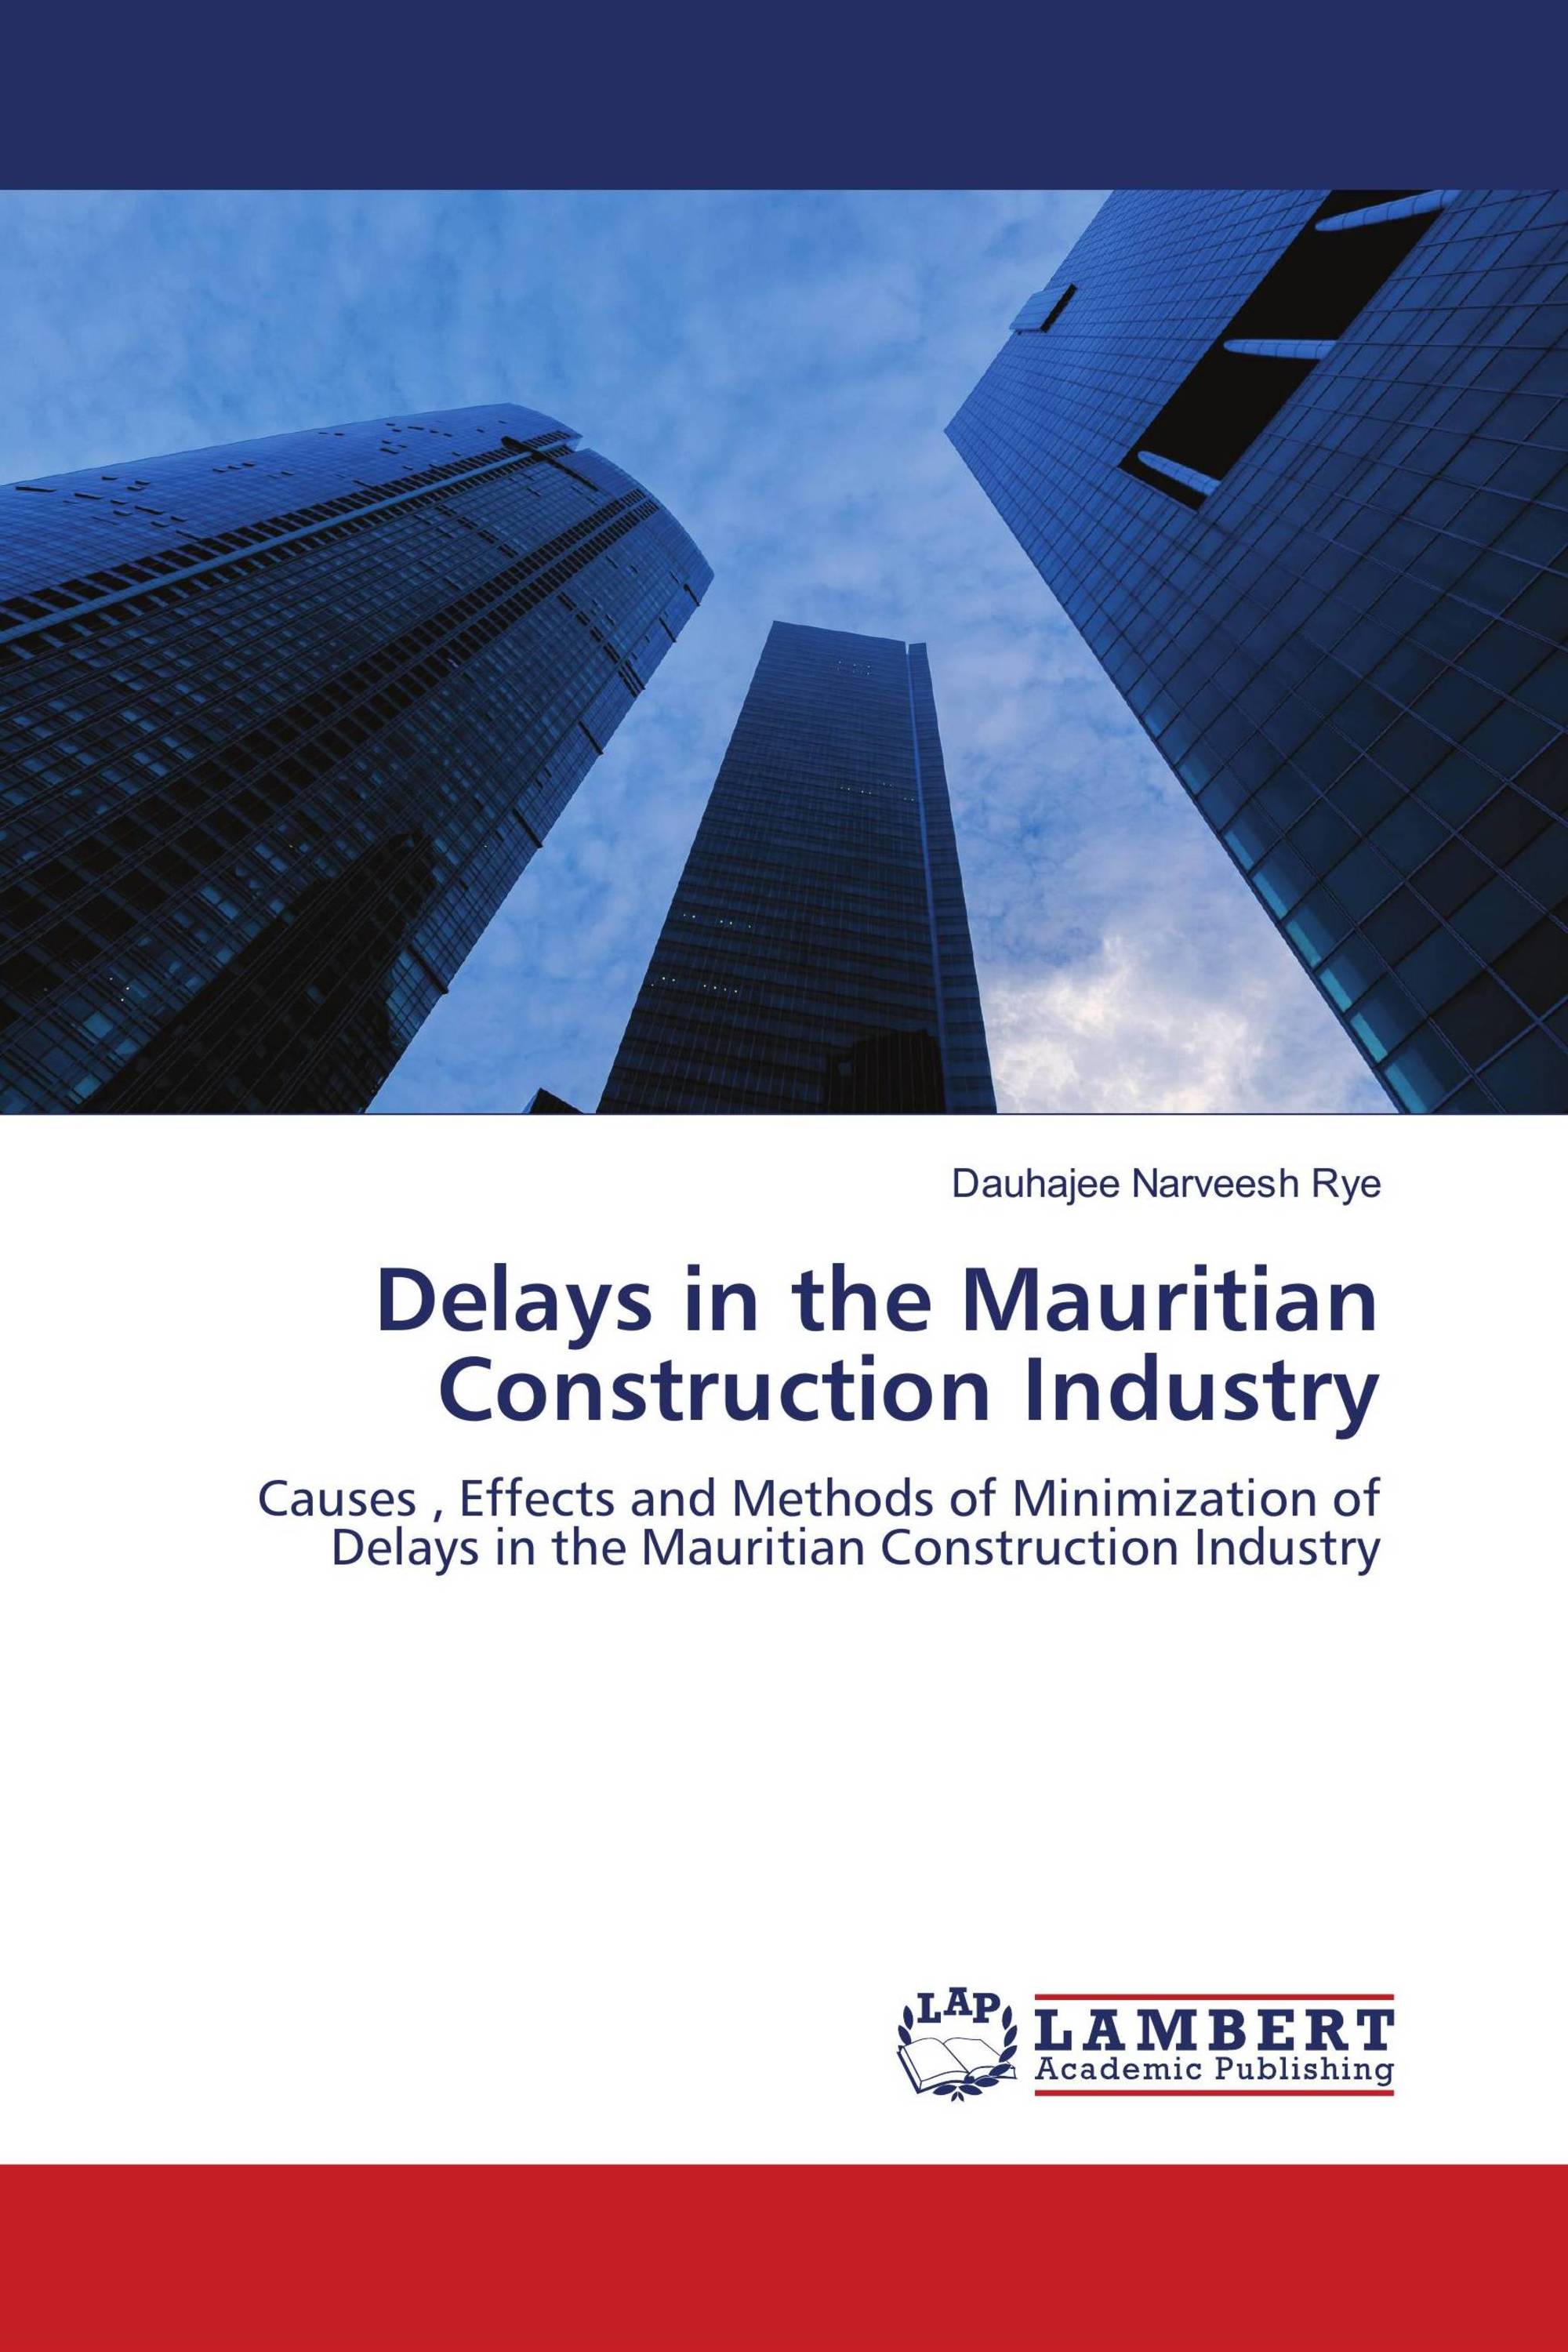 Delay in construction dissertation